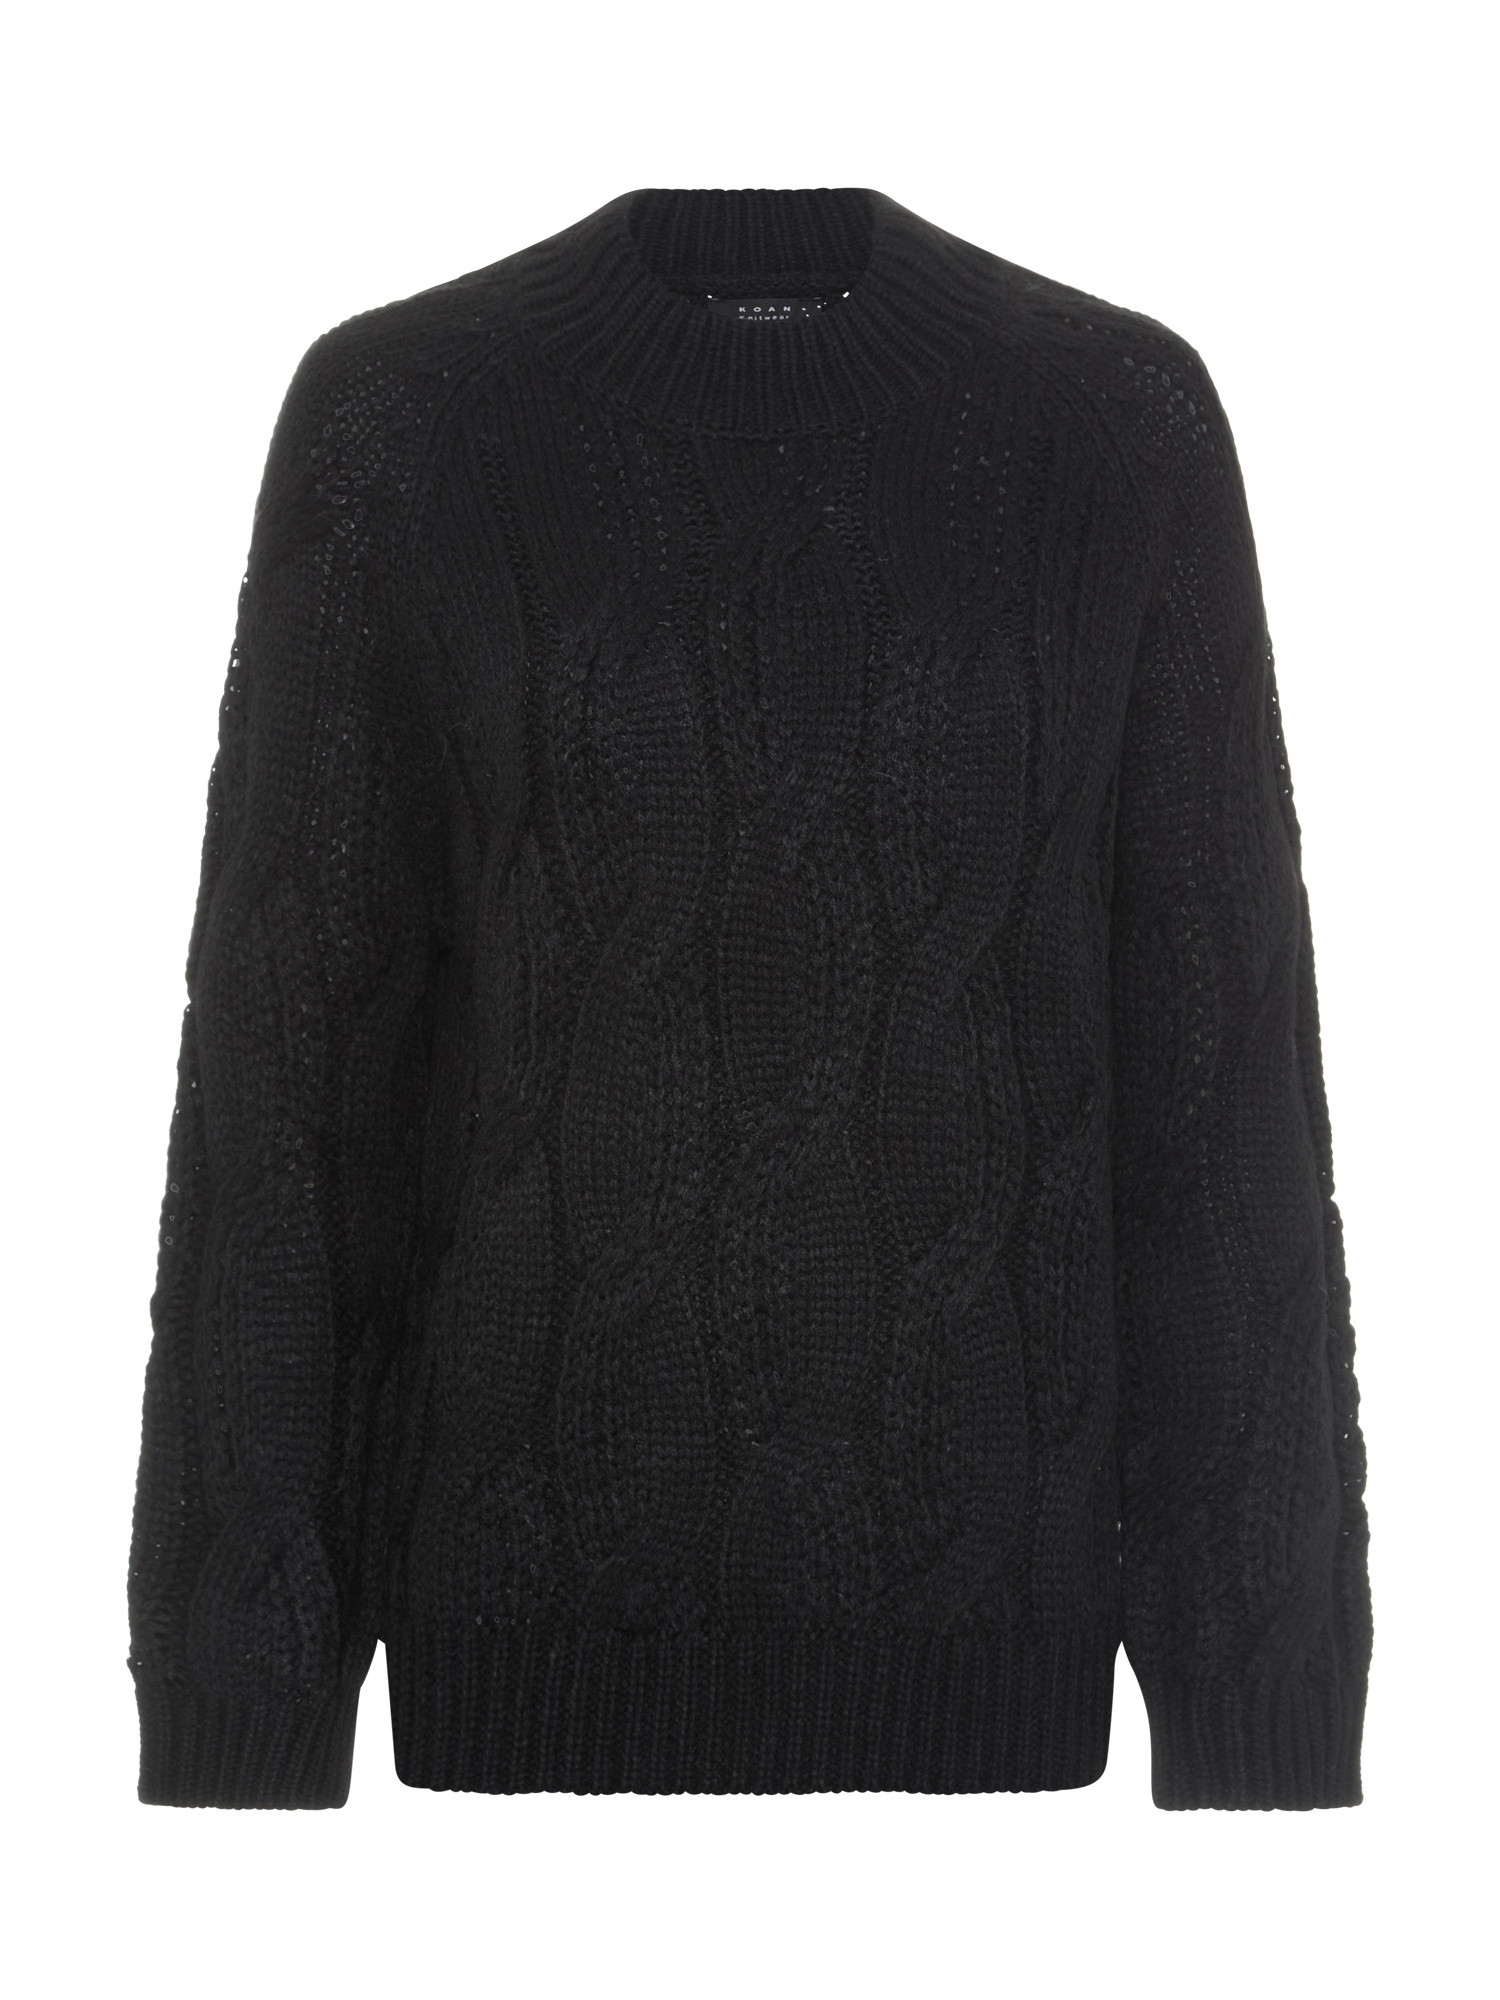 Koan - Crewneck sweater with braid motif, Black, large image number 0